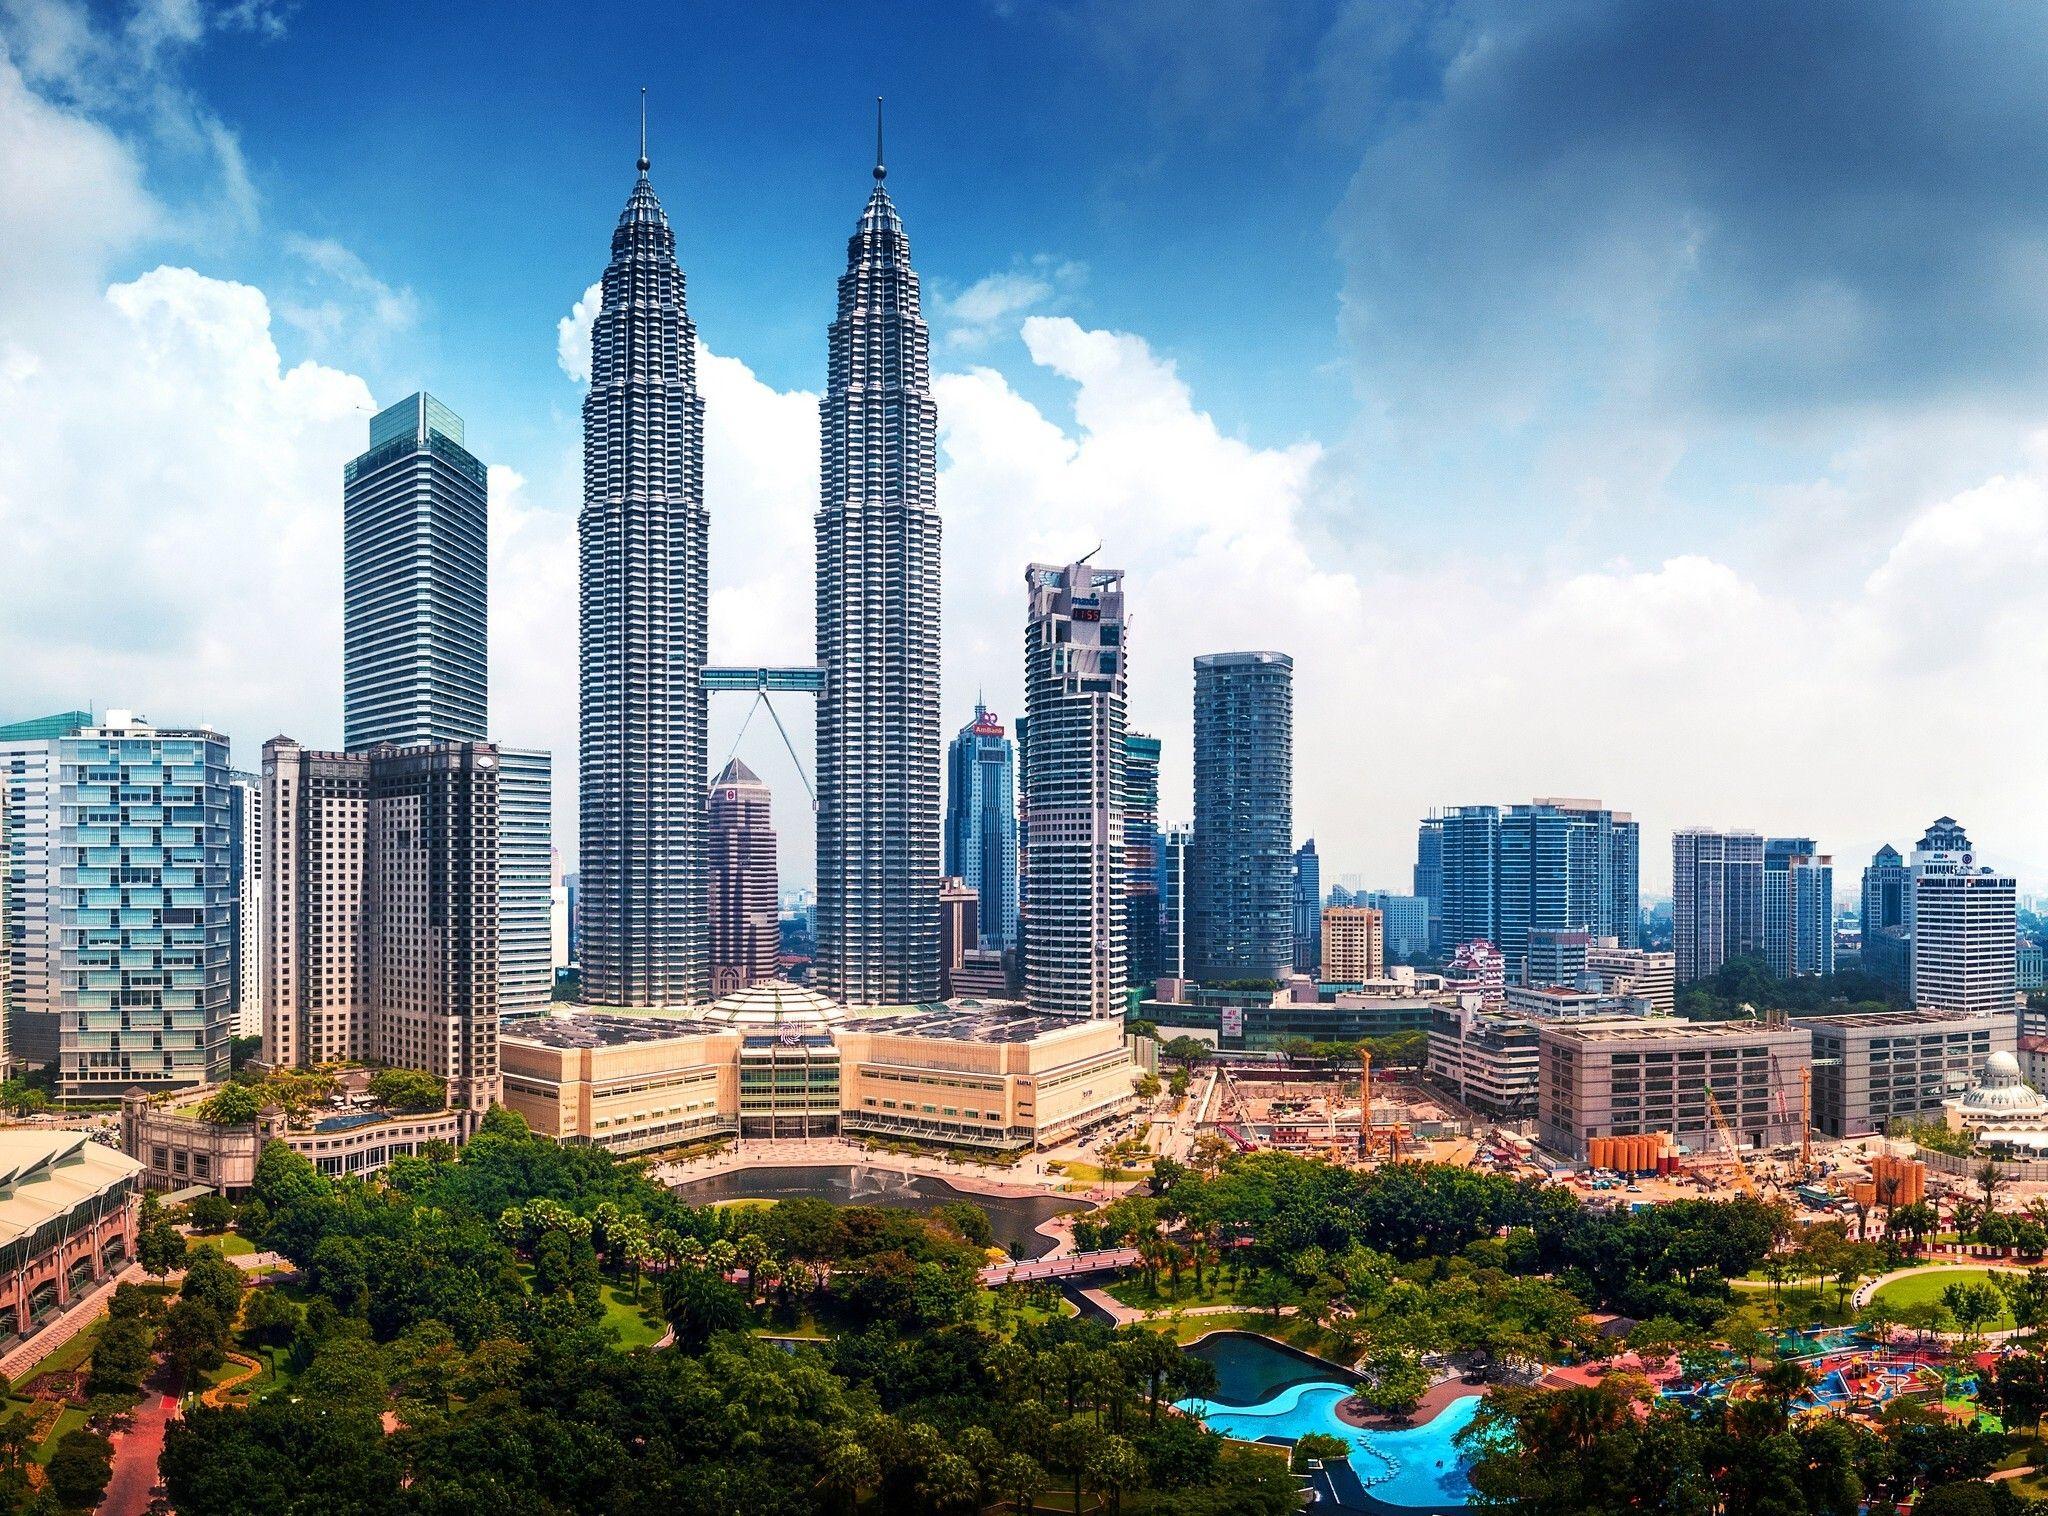 Kuala Lumpur Wallpapers Top Free Kuala Lumpur Backgrounds